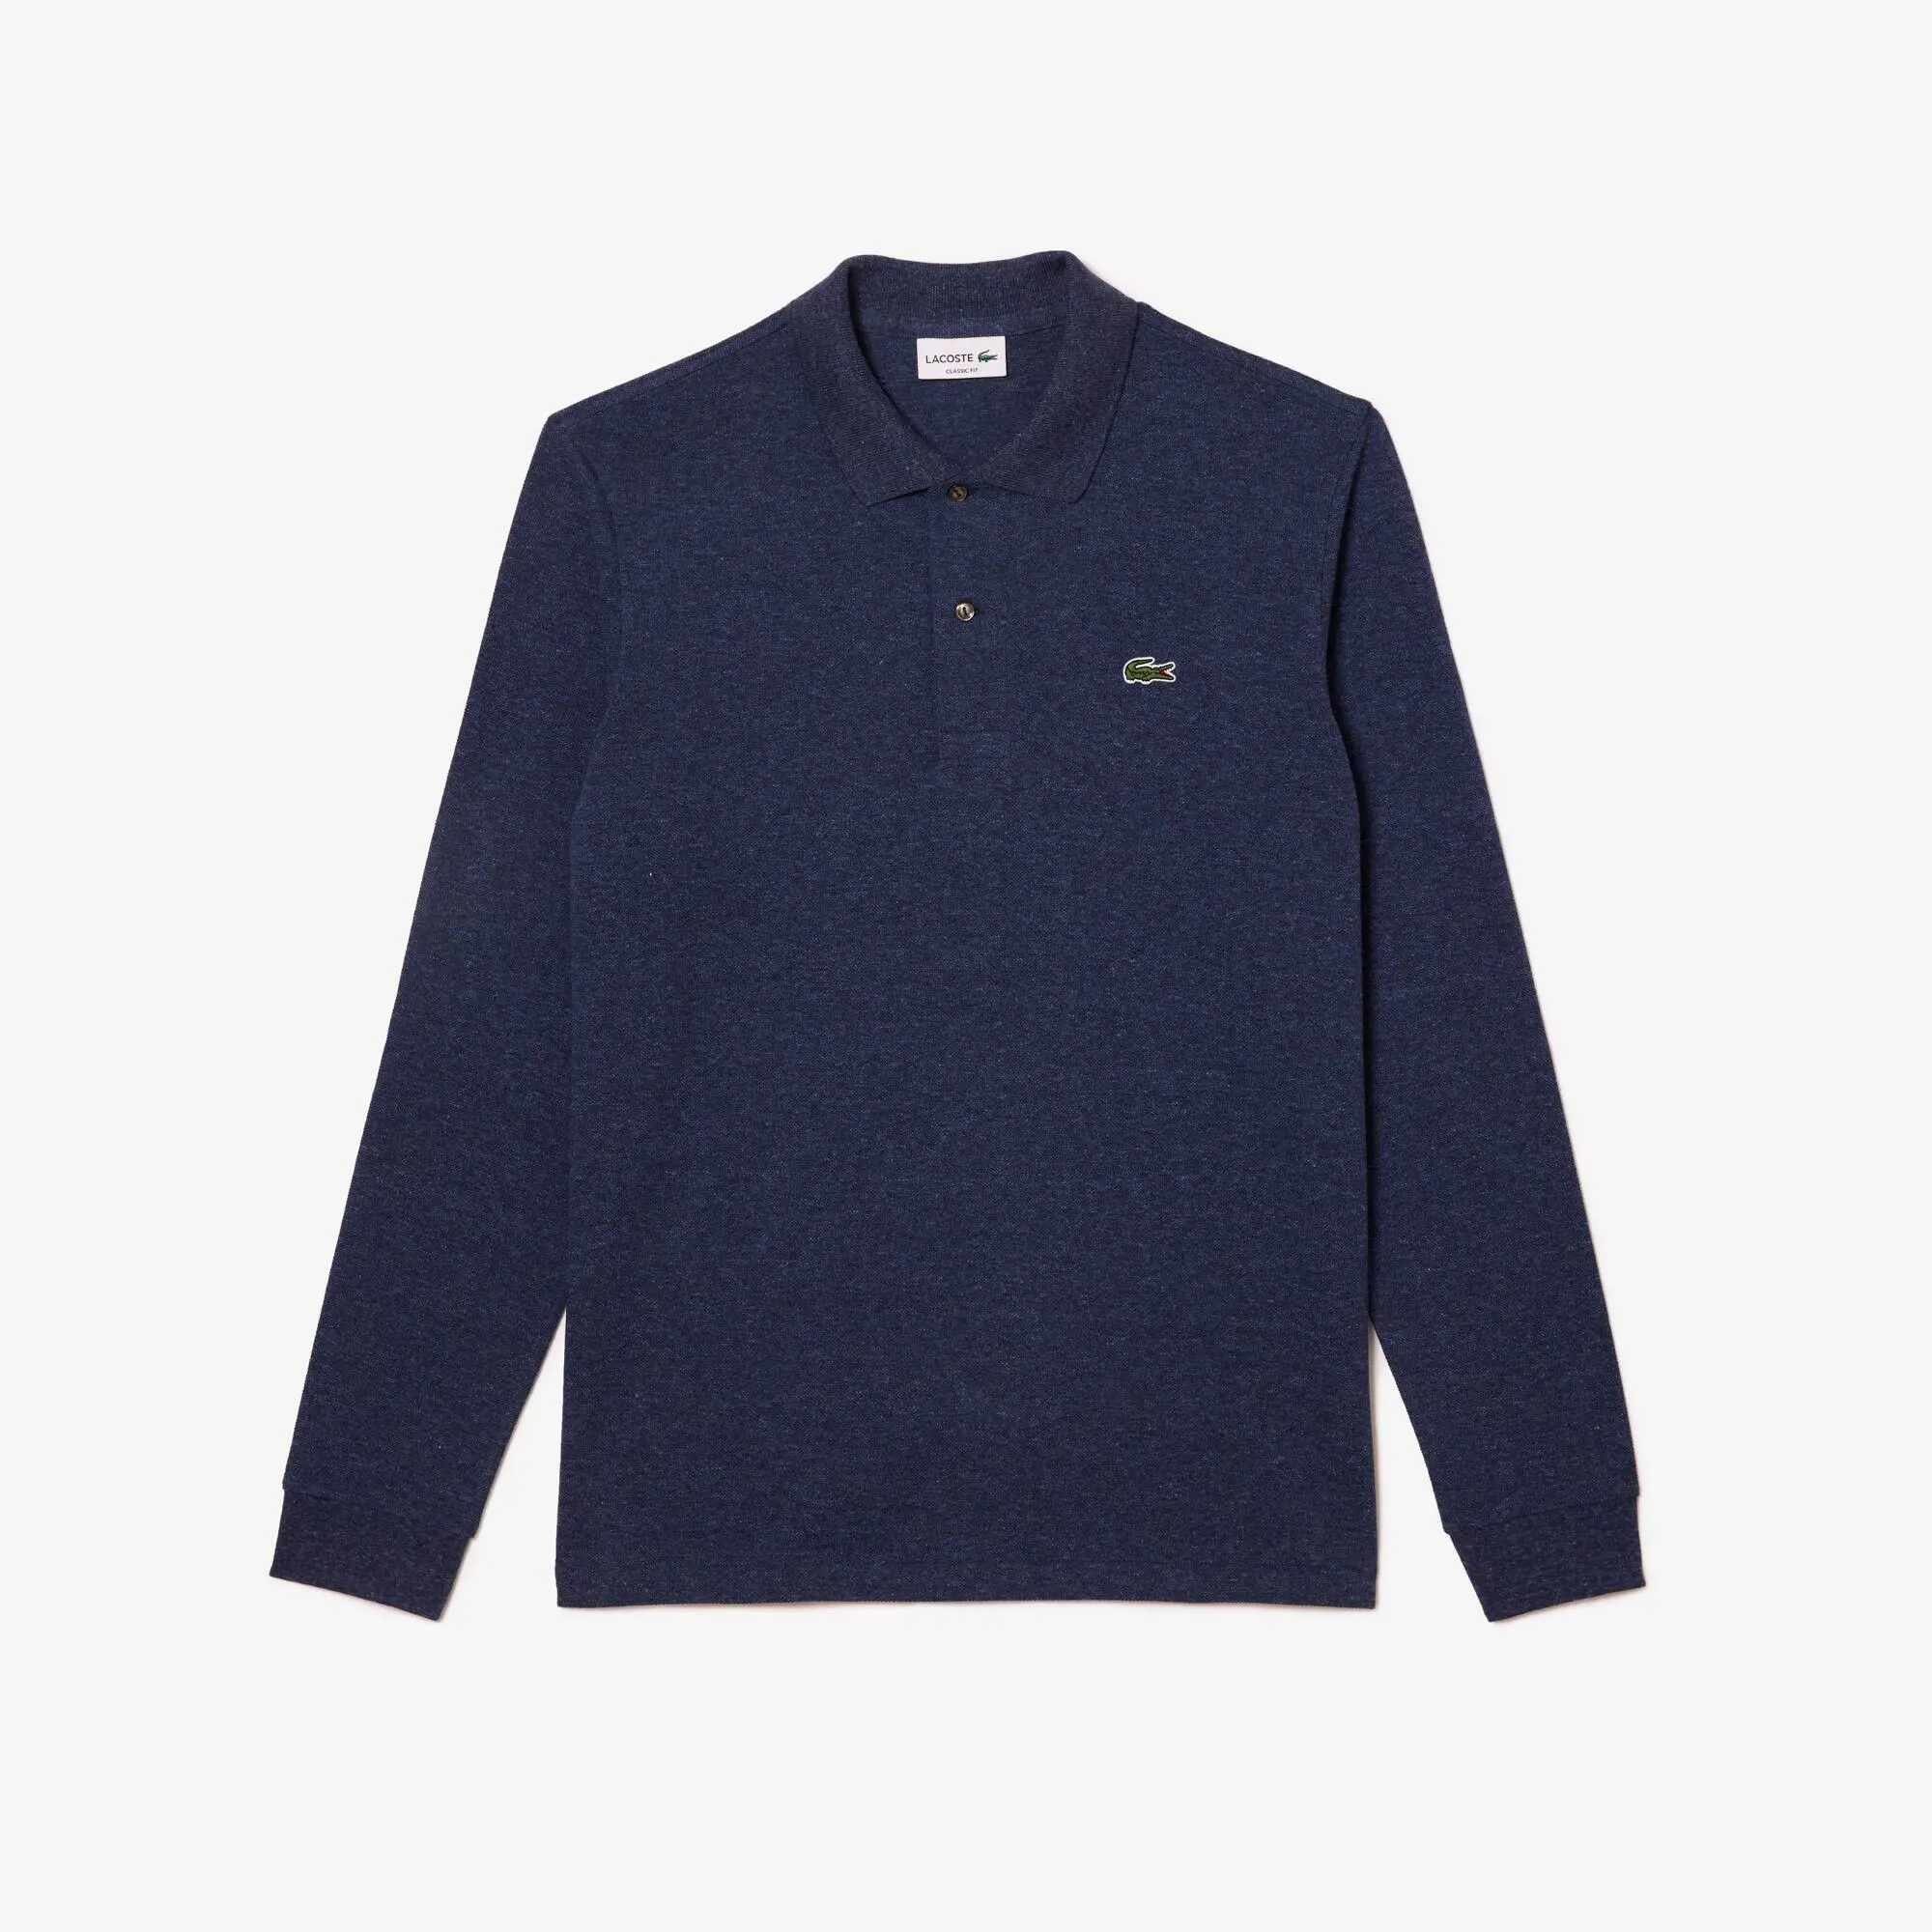 Lacoste Original L.12.12 Long Sleeve Heathered Cotton Polo Shirt. 2